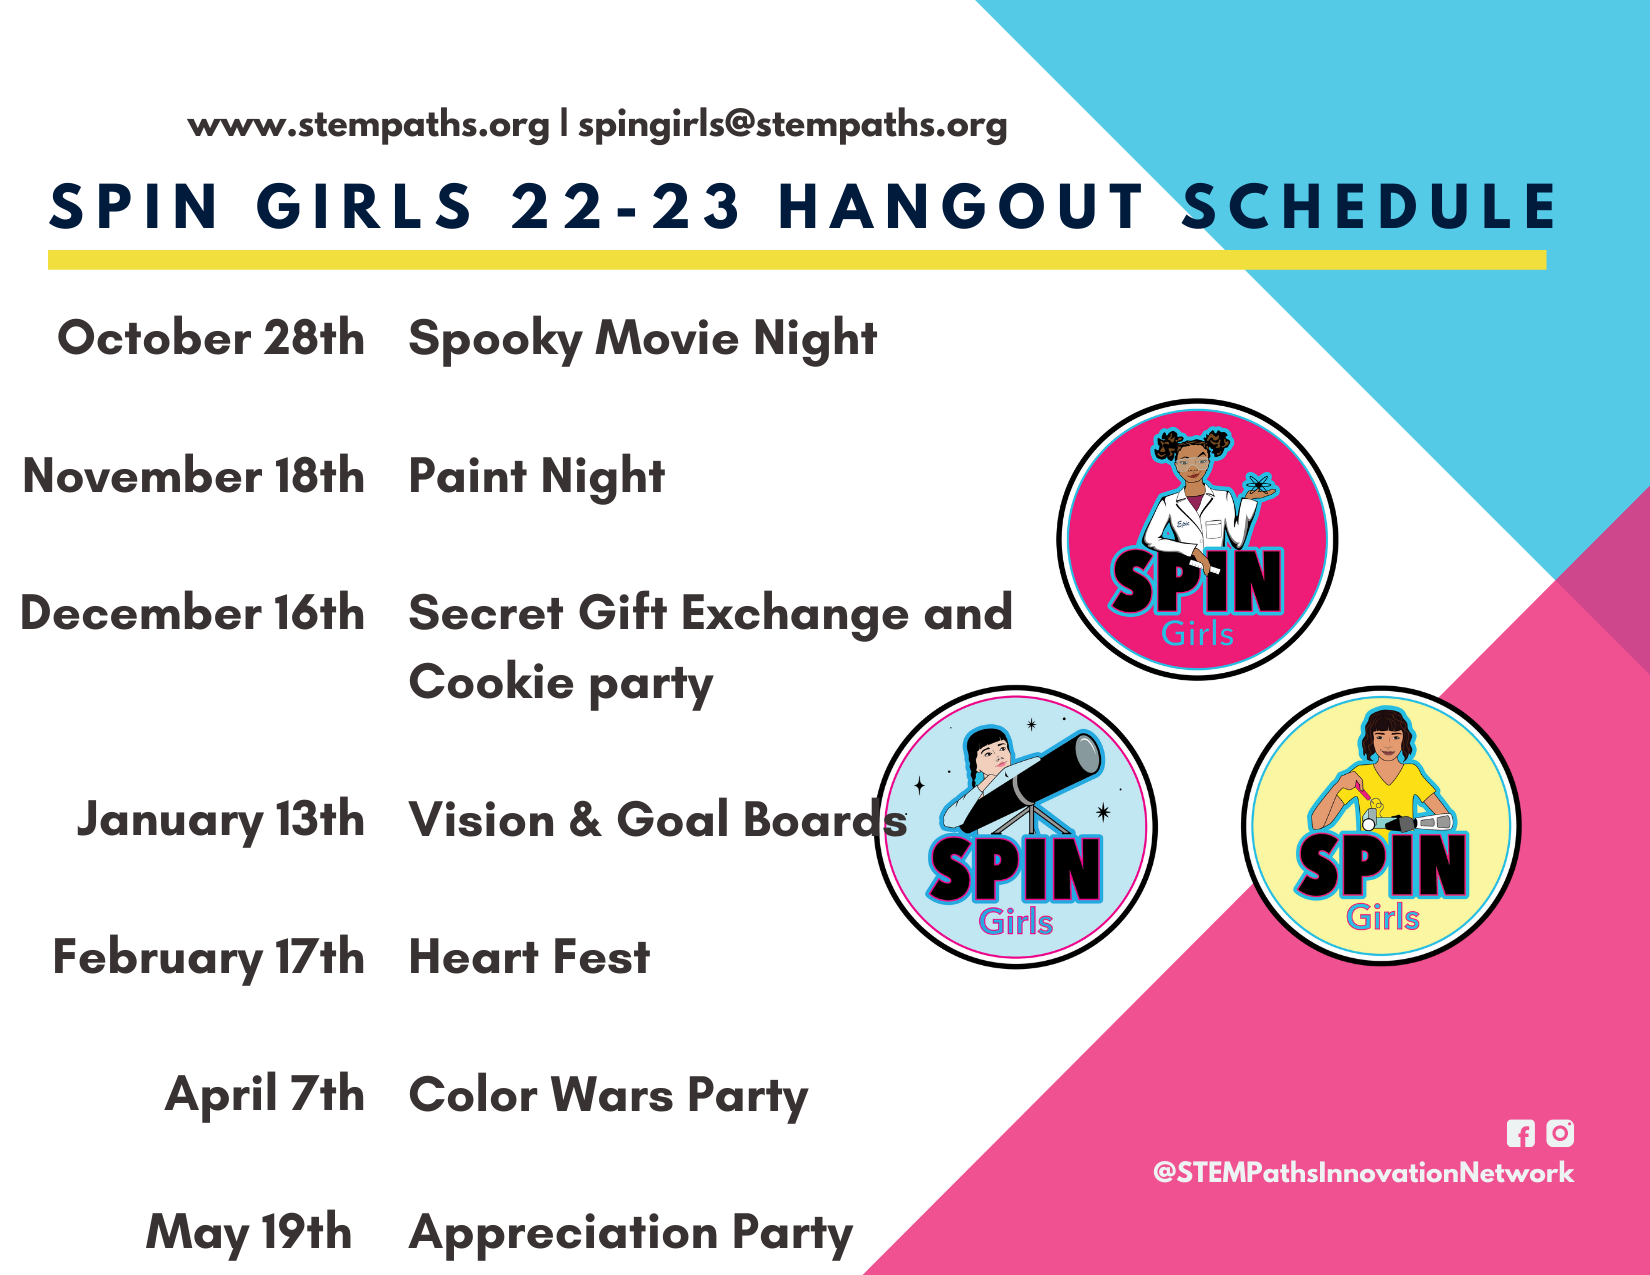 SG 22-23 hangout schedule.png